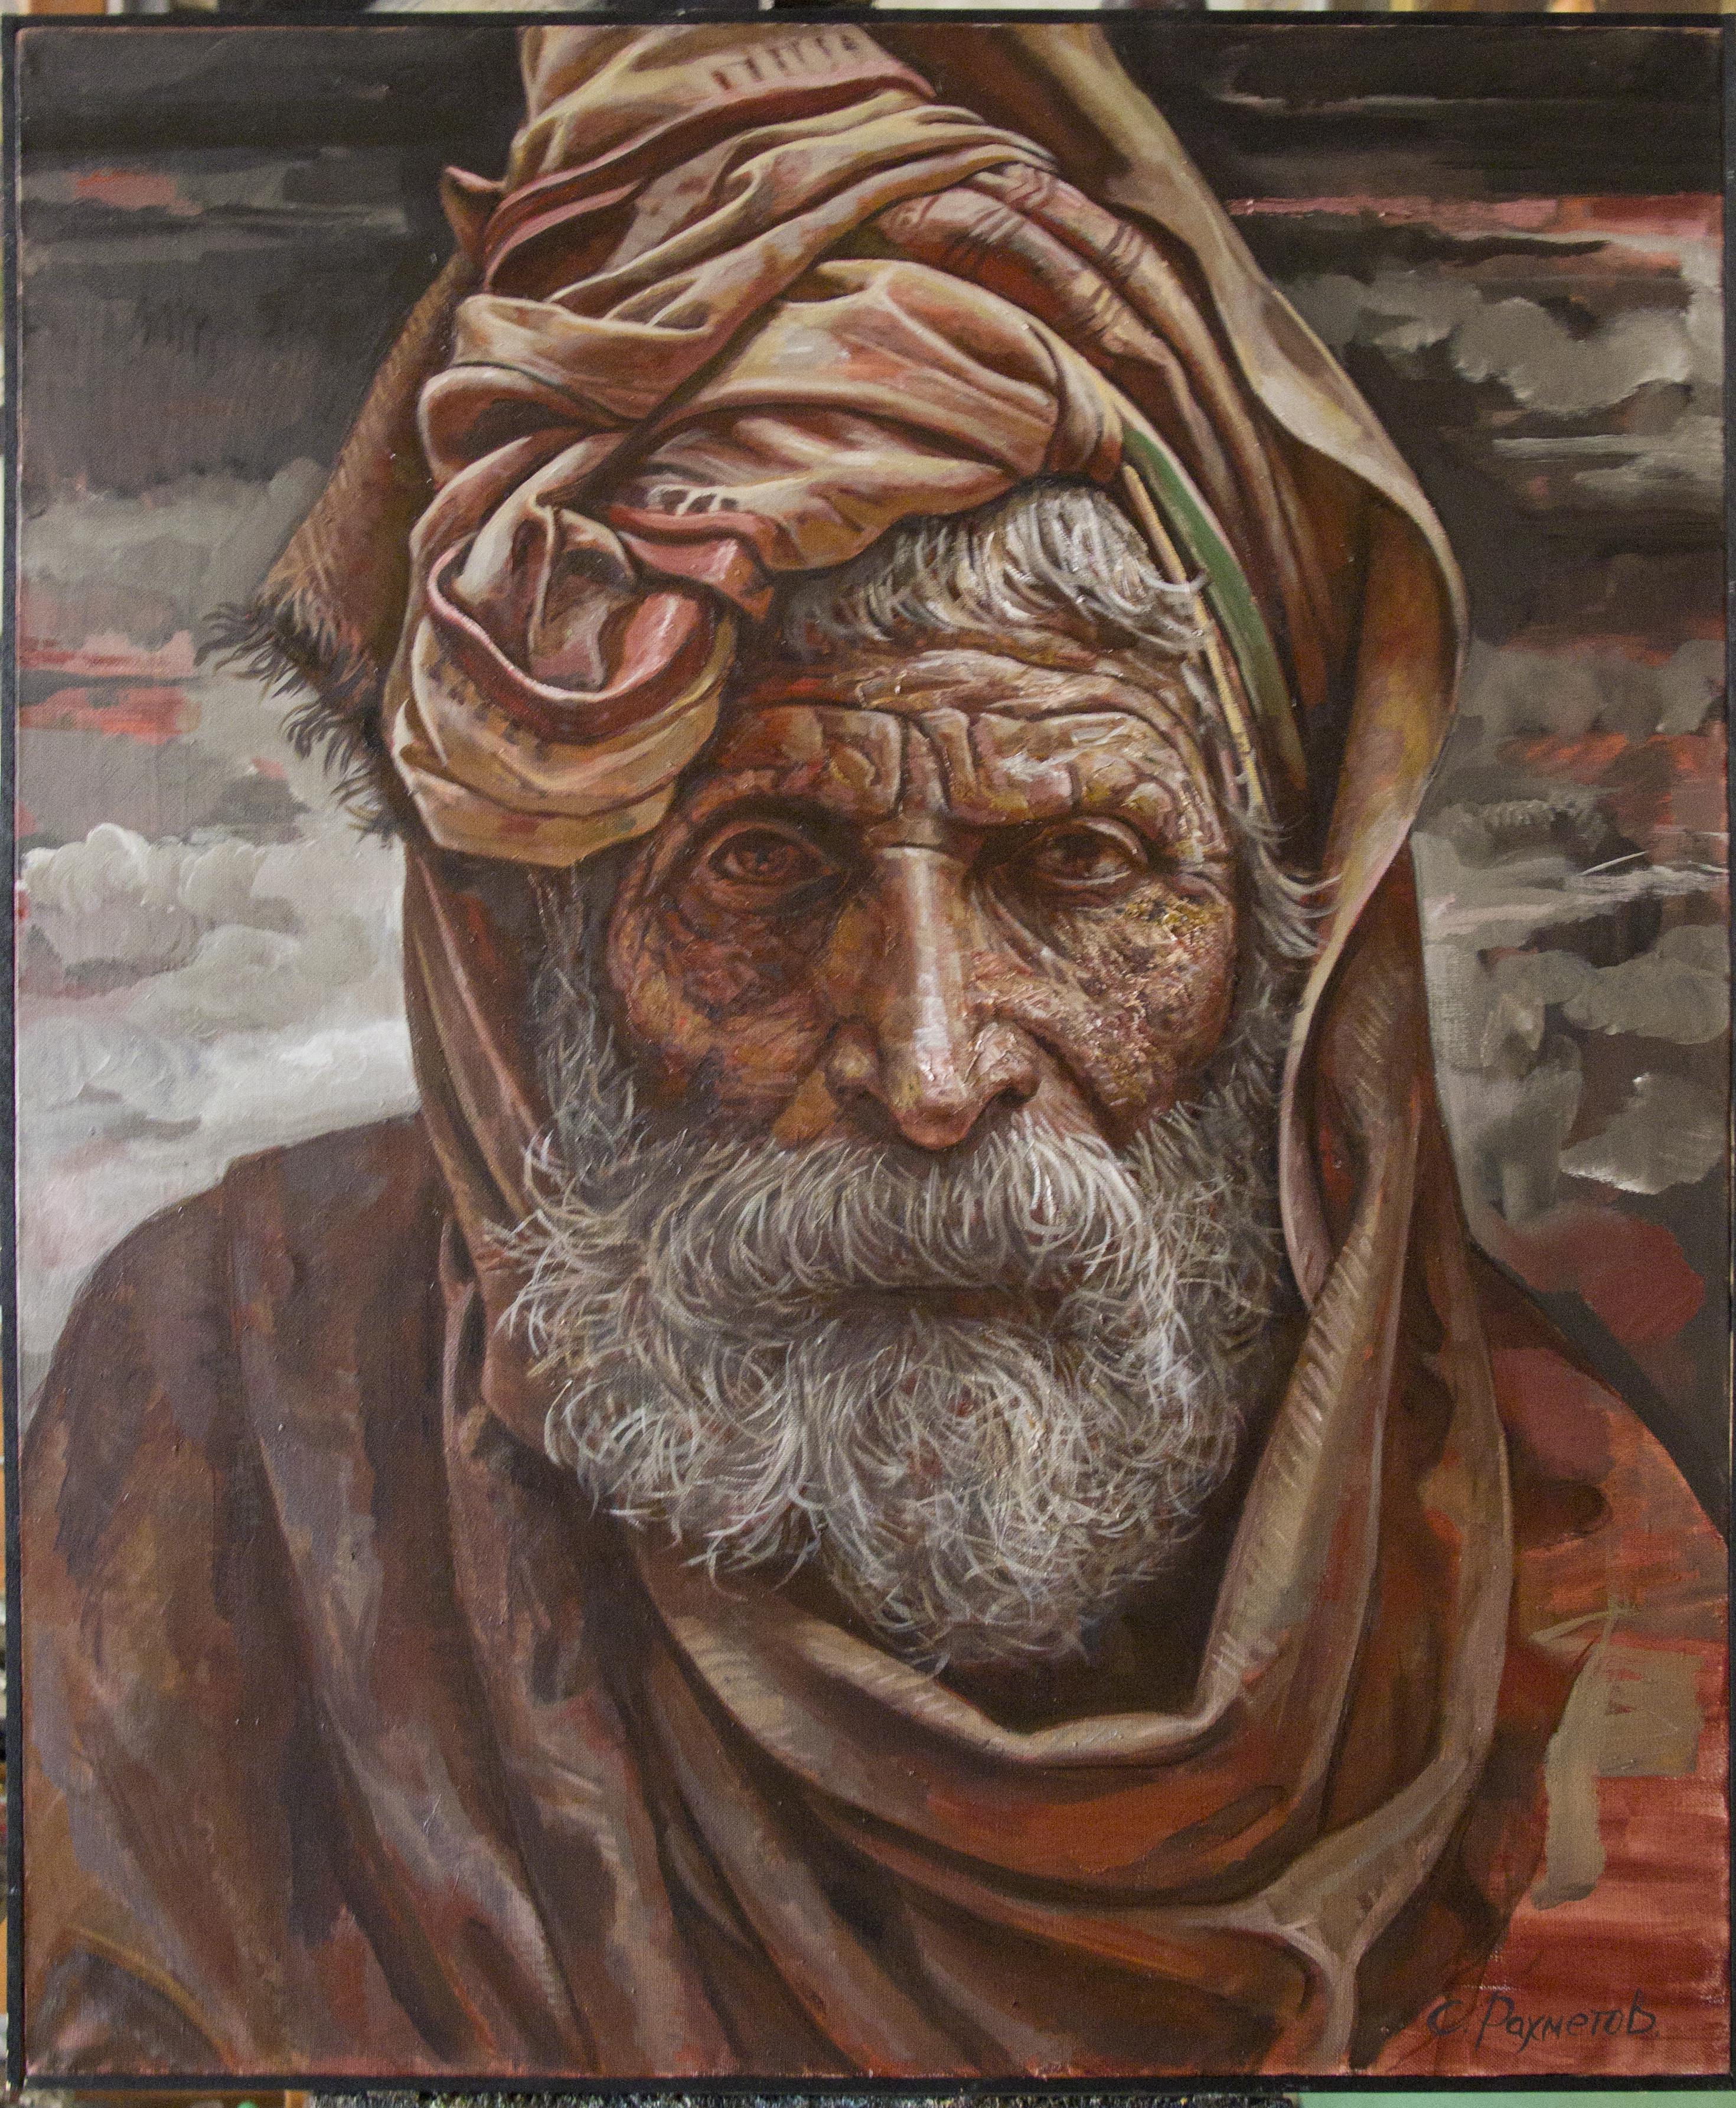 Afghan man